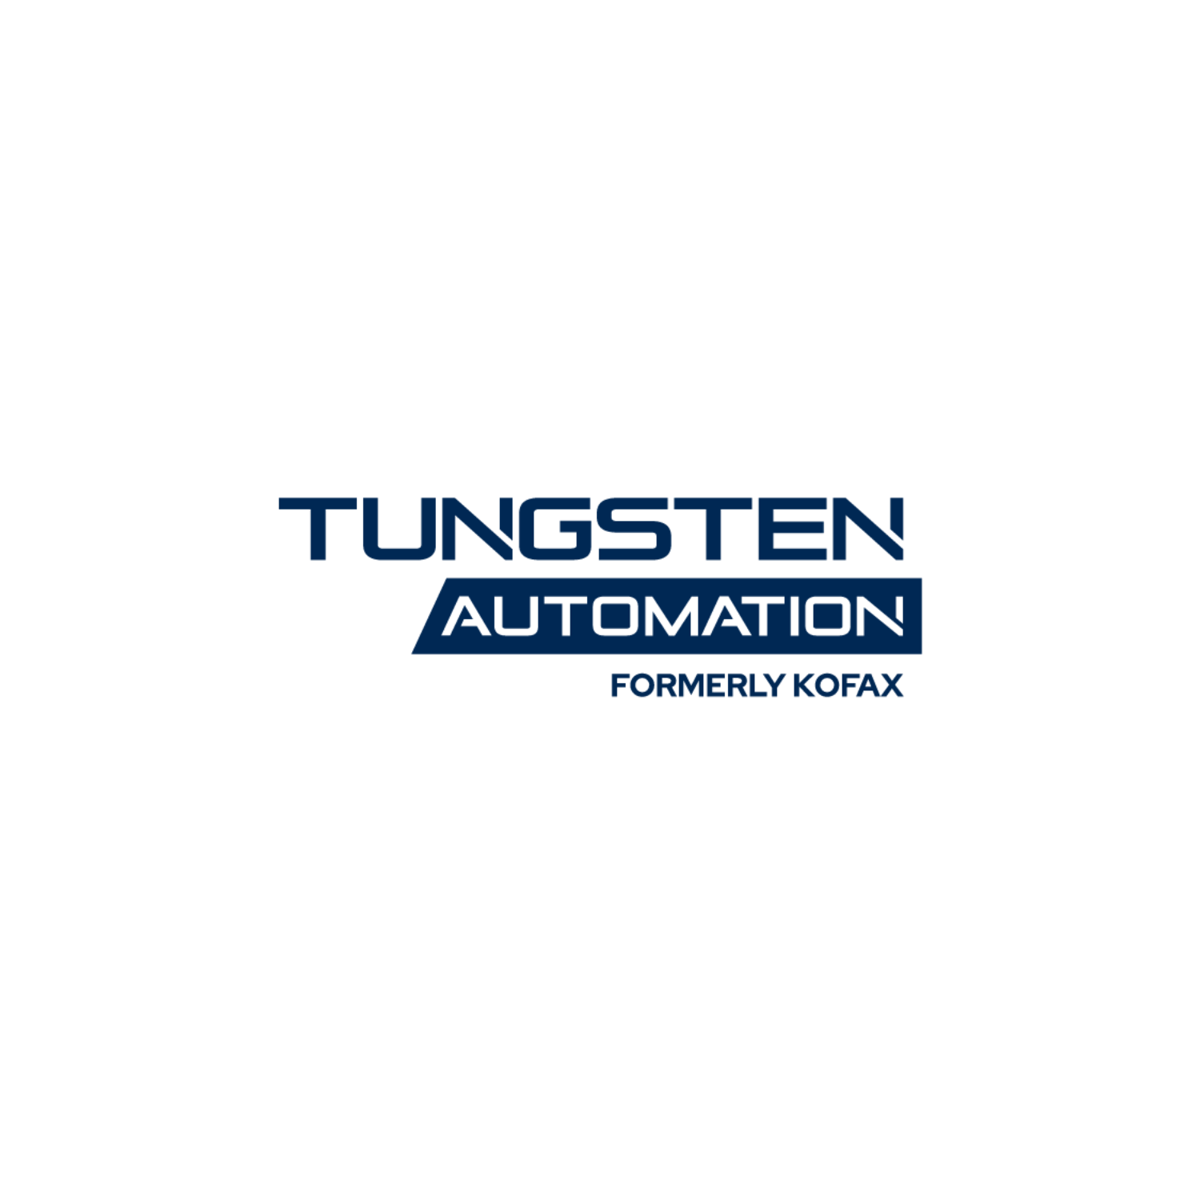 Tungsten Automation Formerly Kofax